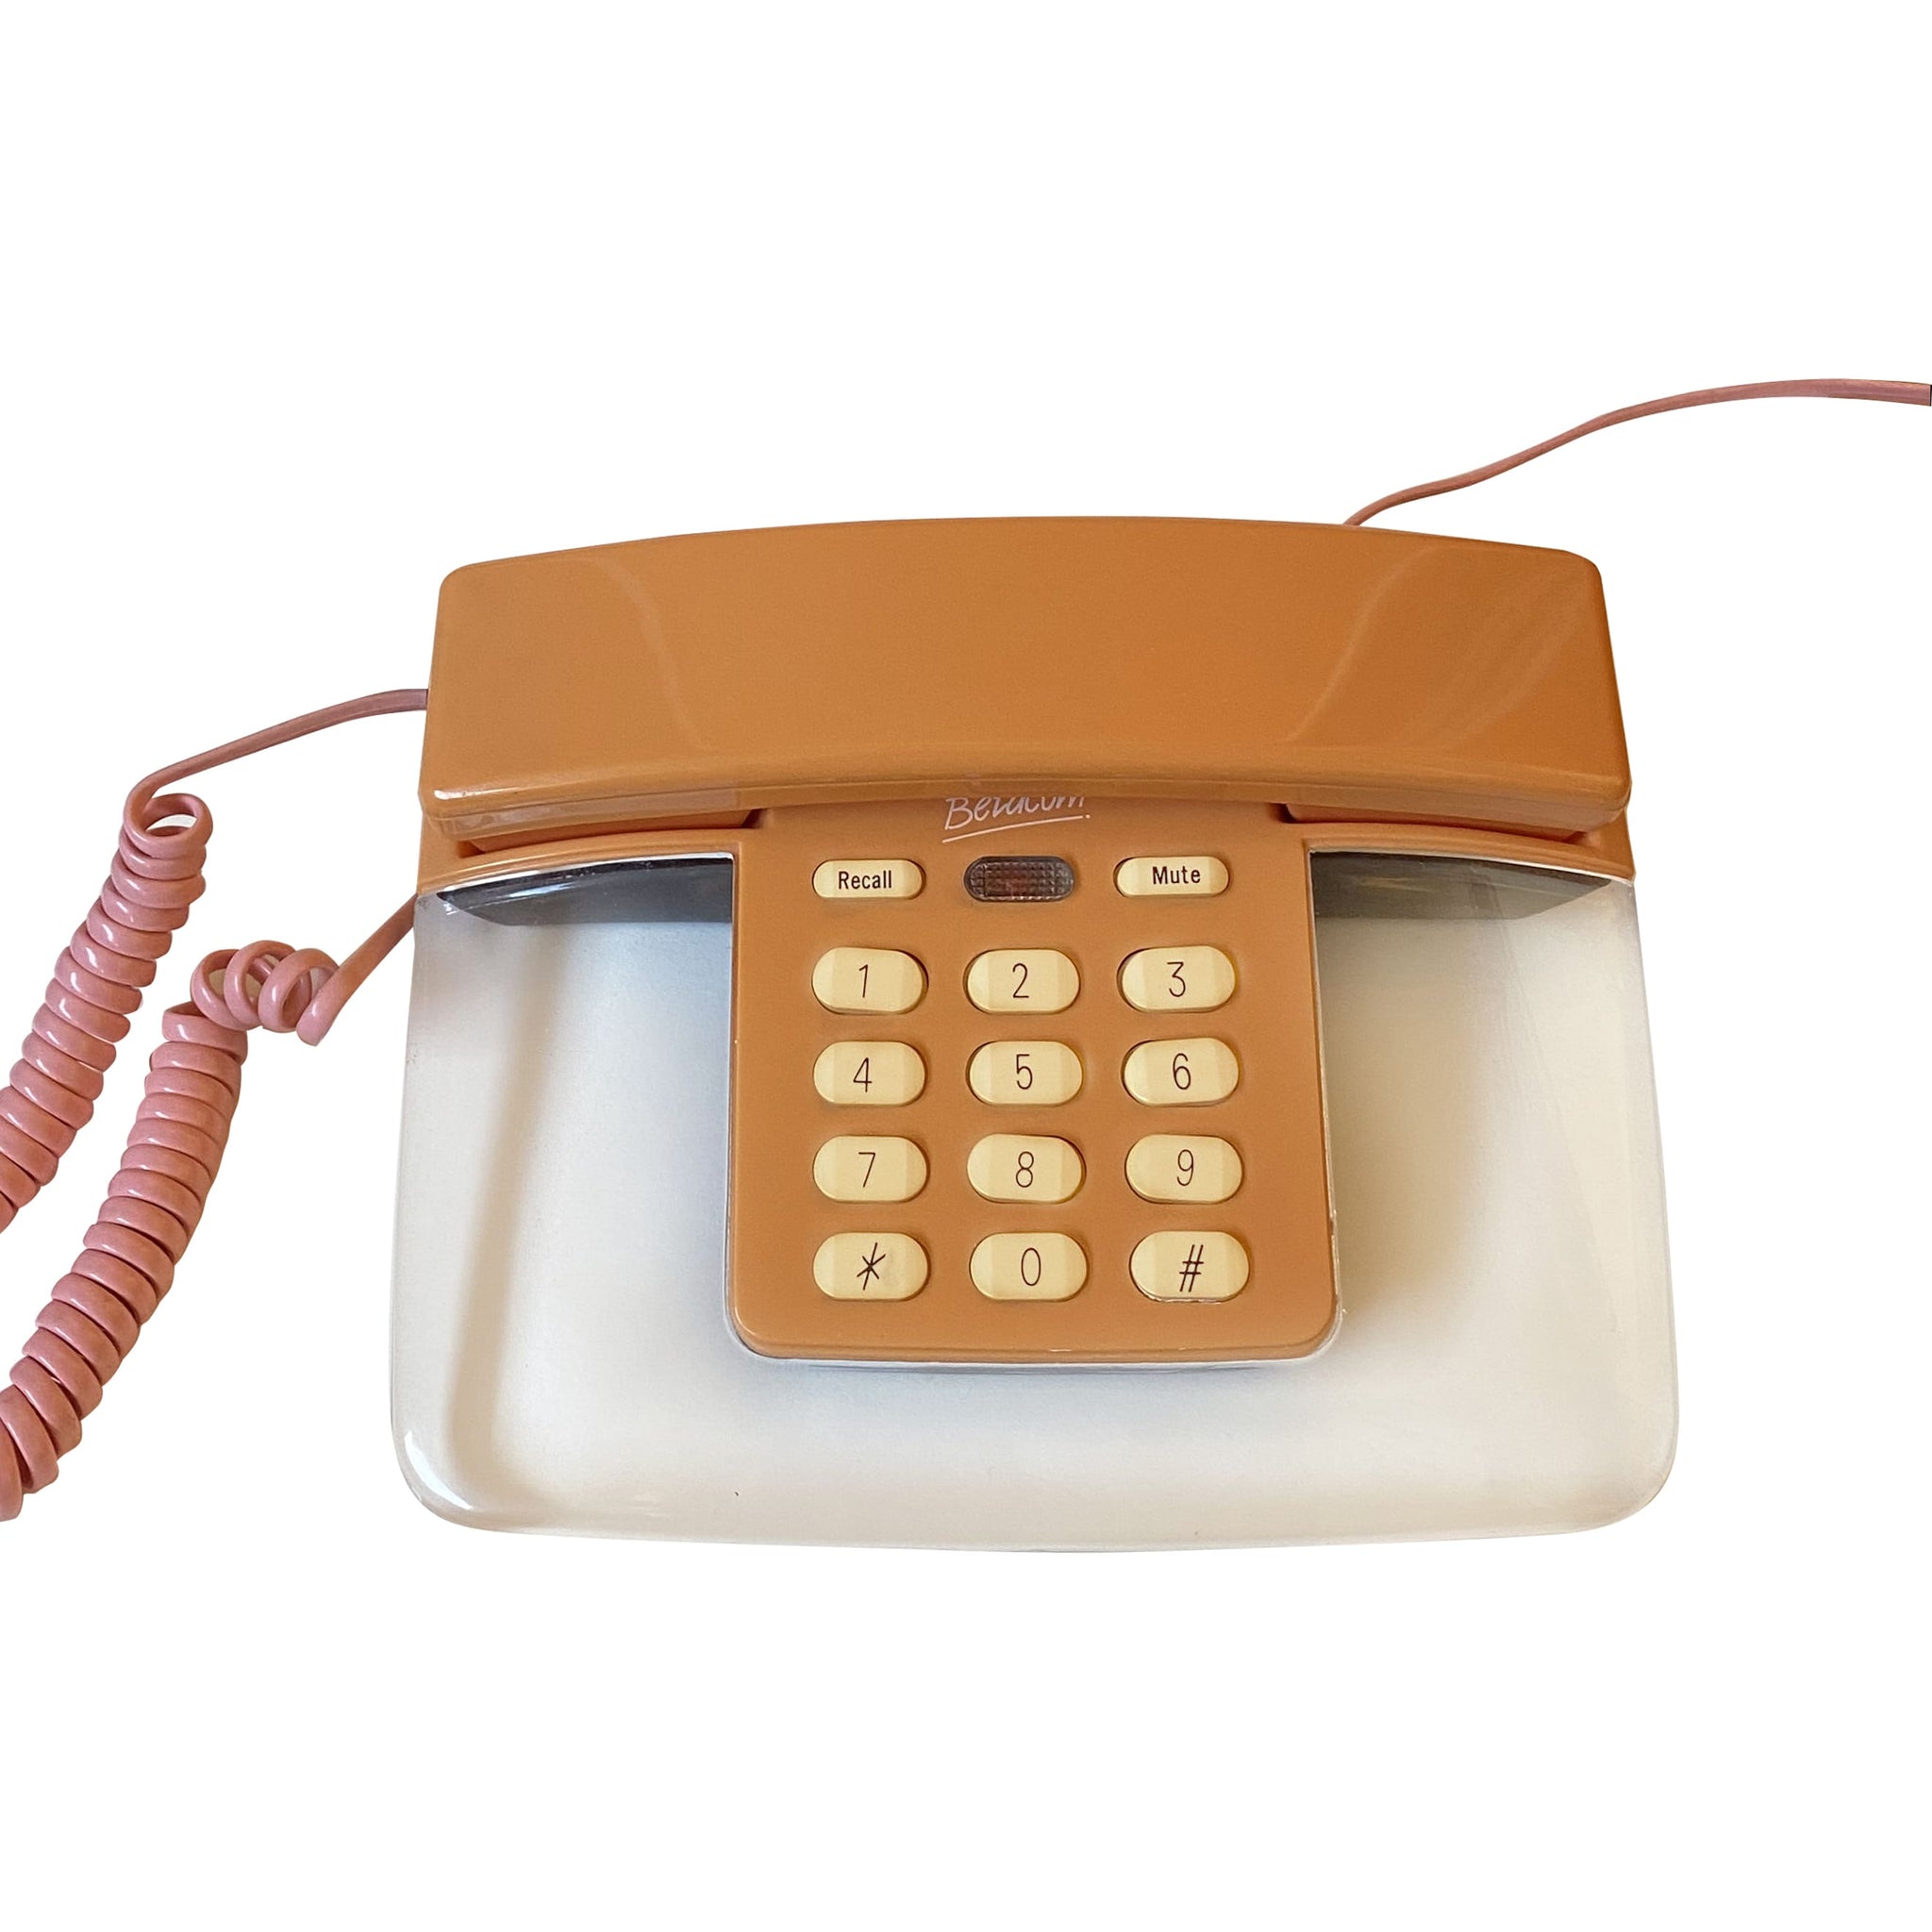 80s Retro Ombre Pink and Orange Betacom Cristal Phone